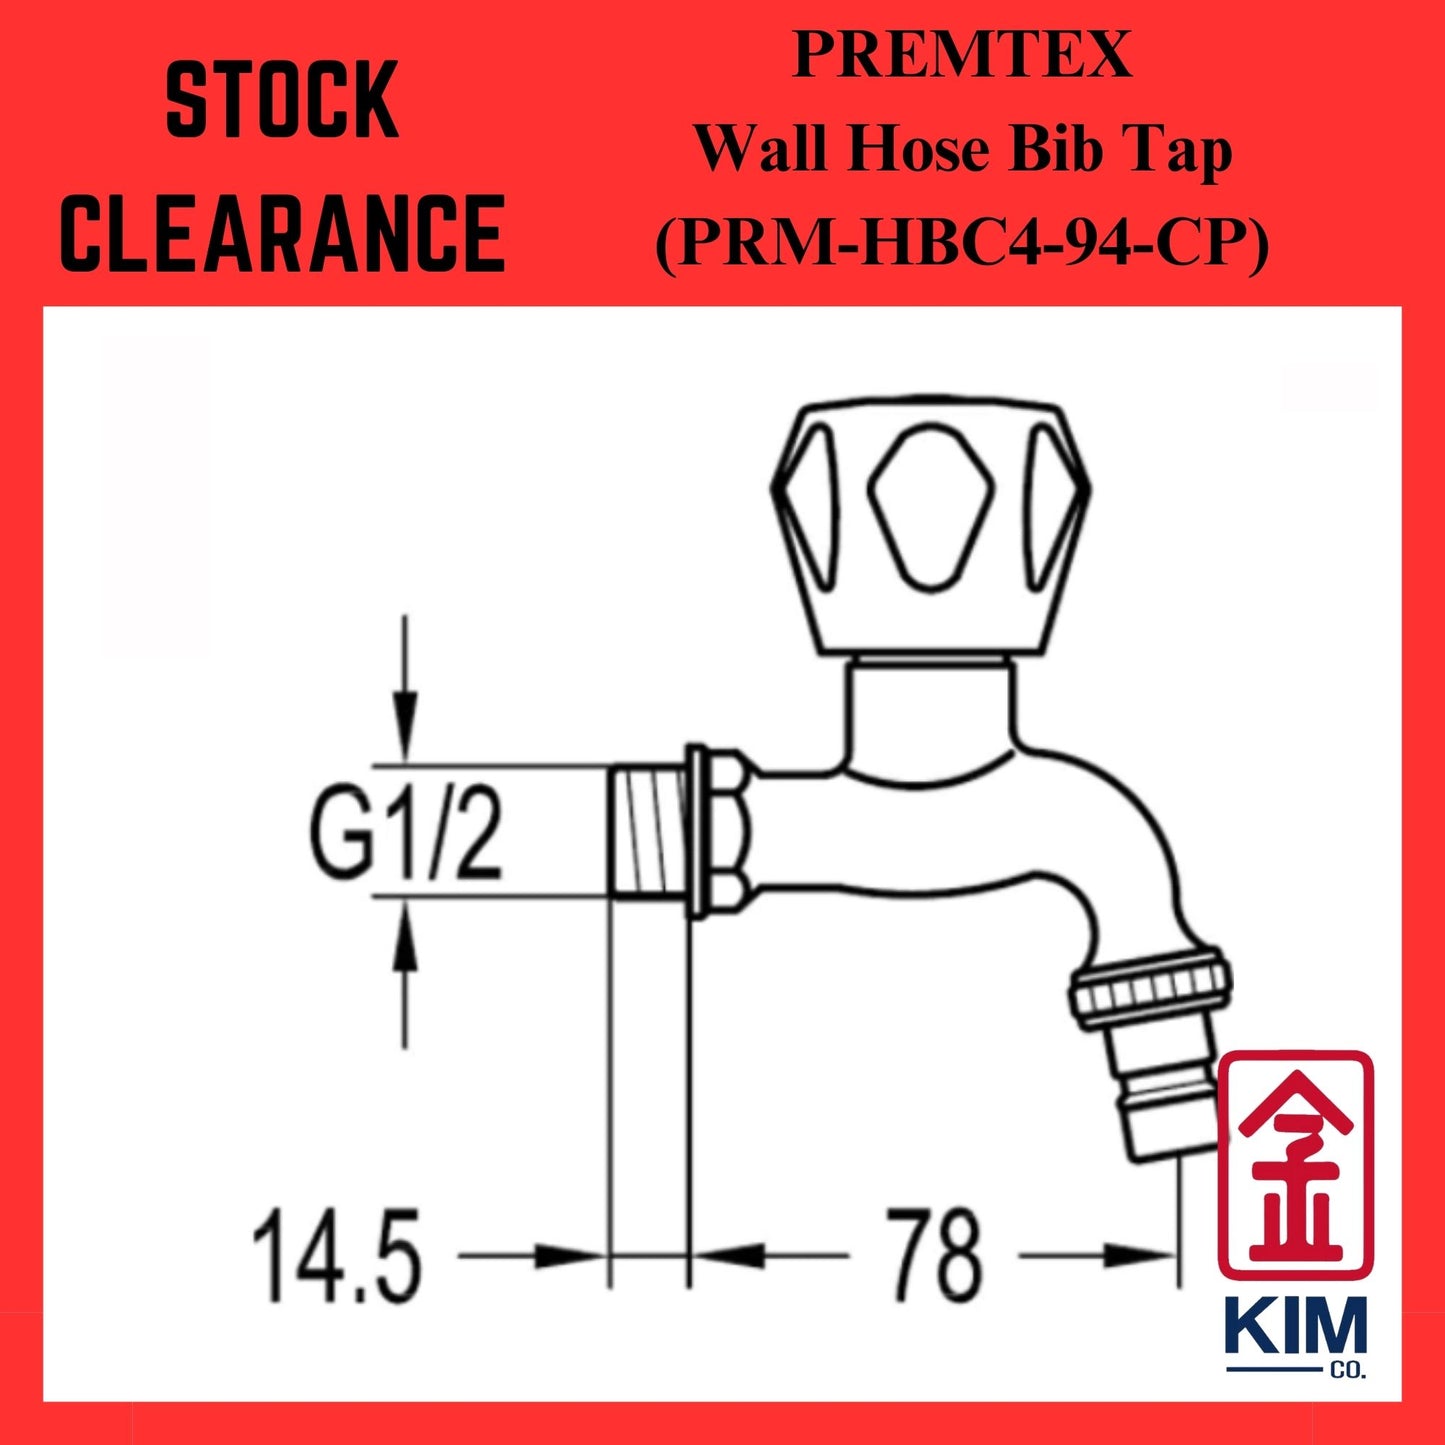 ( Stock Clearance ) Premtex Wall Hose Bib Tap (PRM-HBC4-94-CP)